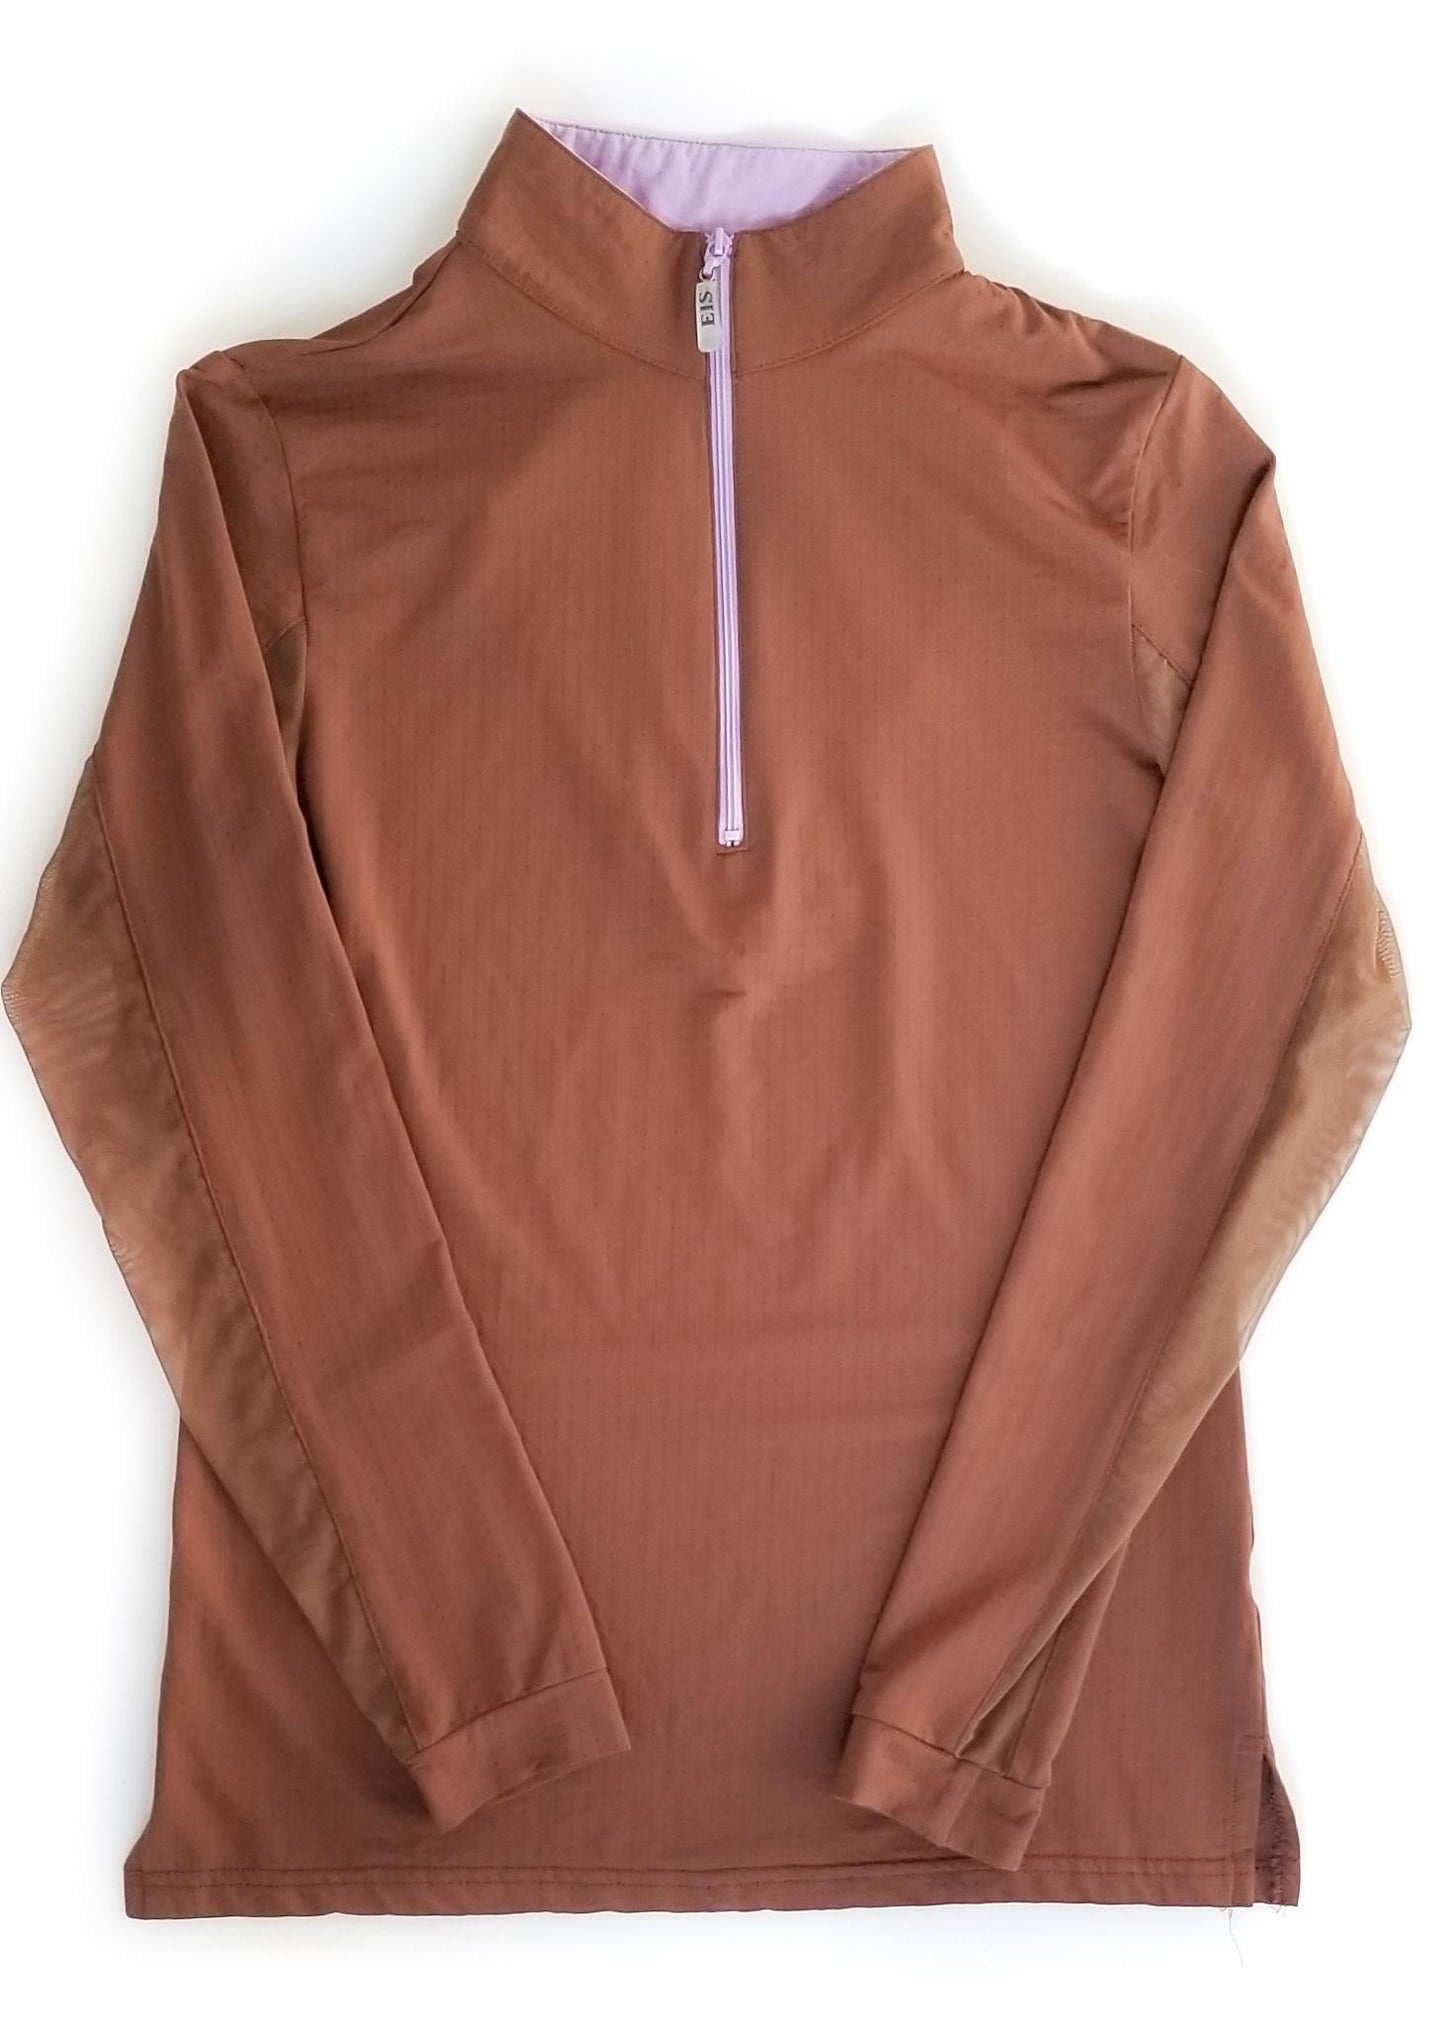 EIS Long Sleeve Sun Shirt - Brown & Lavender - Women's Small